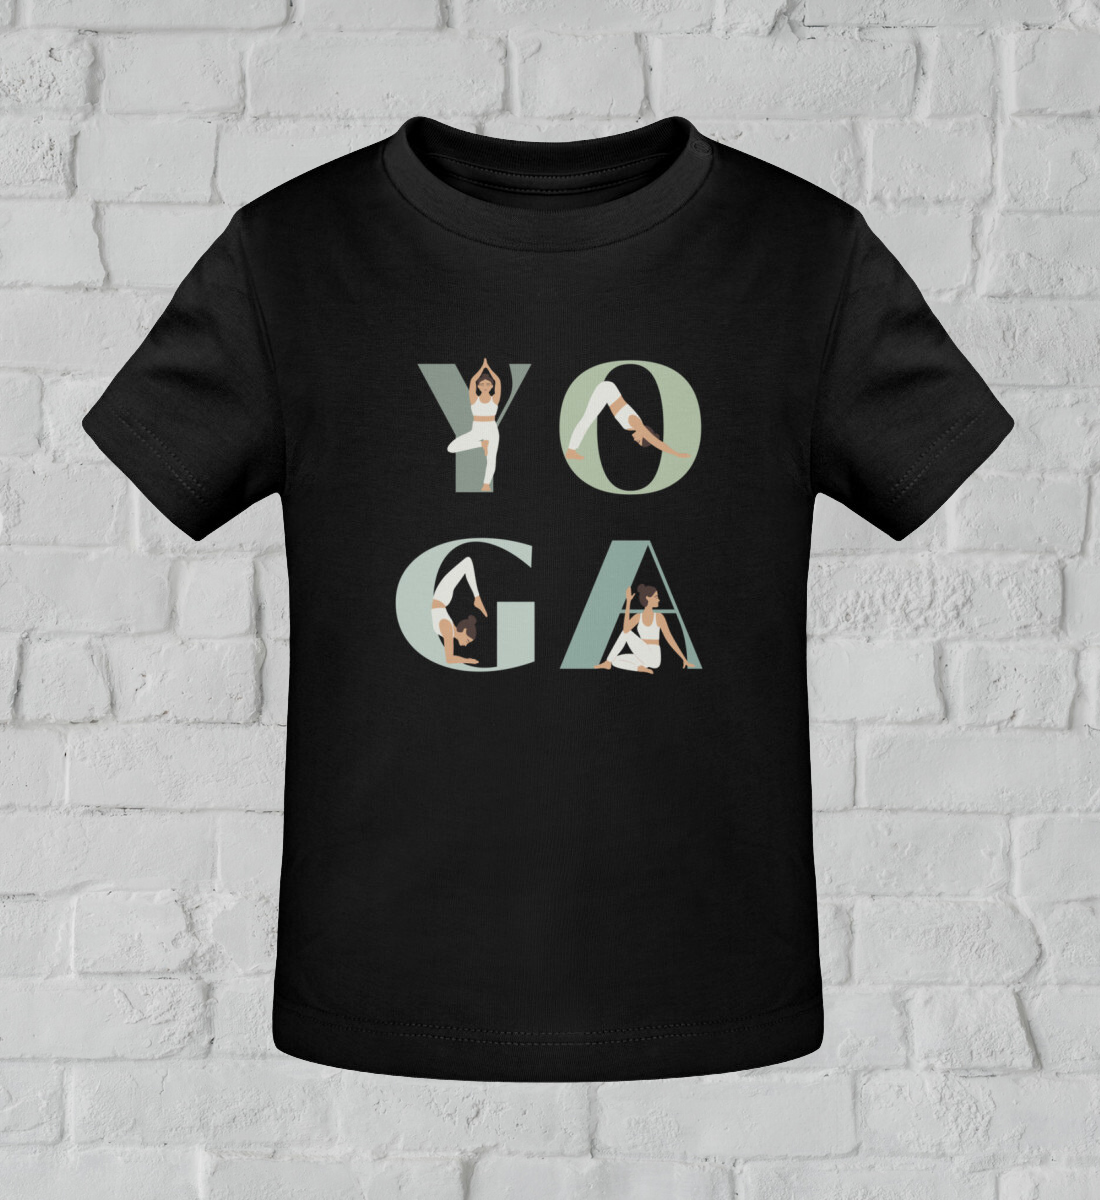 yoga girl l kinder yoga shirt schwarz l mode für kinder l nachhaltige yoga kleidung für kinder l mode für kinder online shoppen